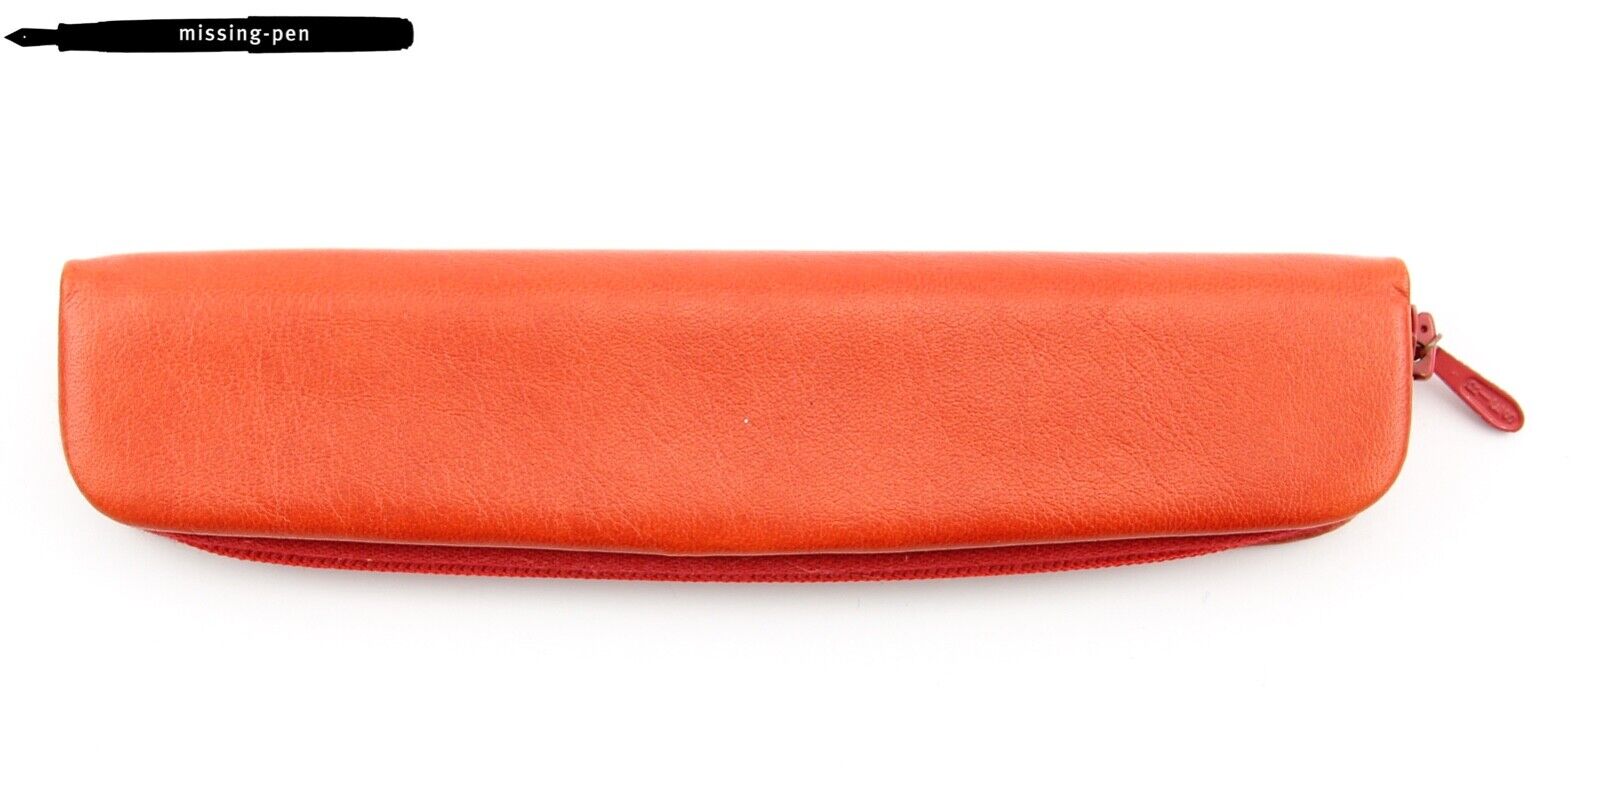 Kübler Genuine Zipper Leather Case / Etui in Red for 1 Pen / Made in Germany